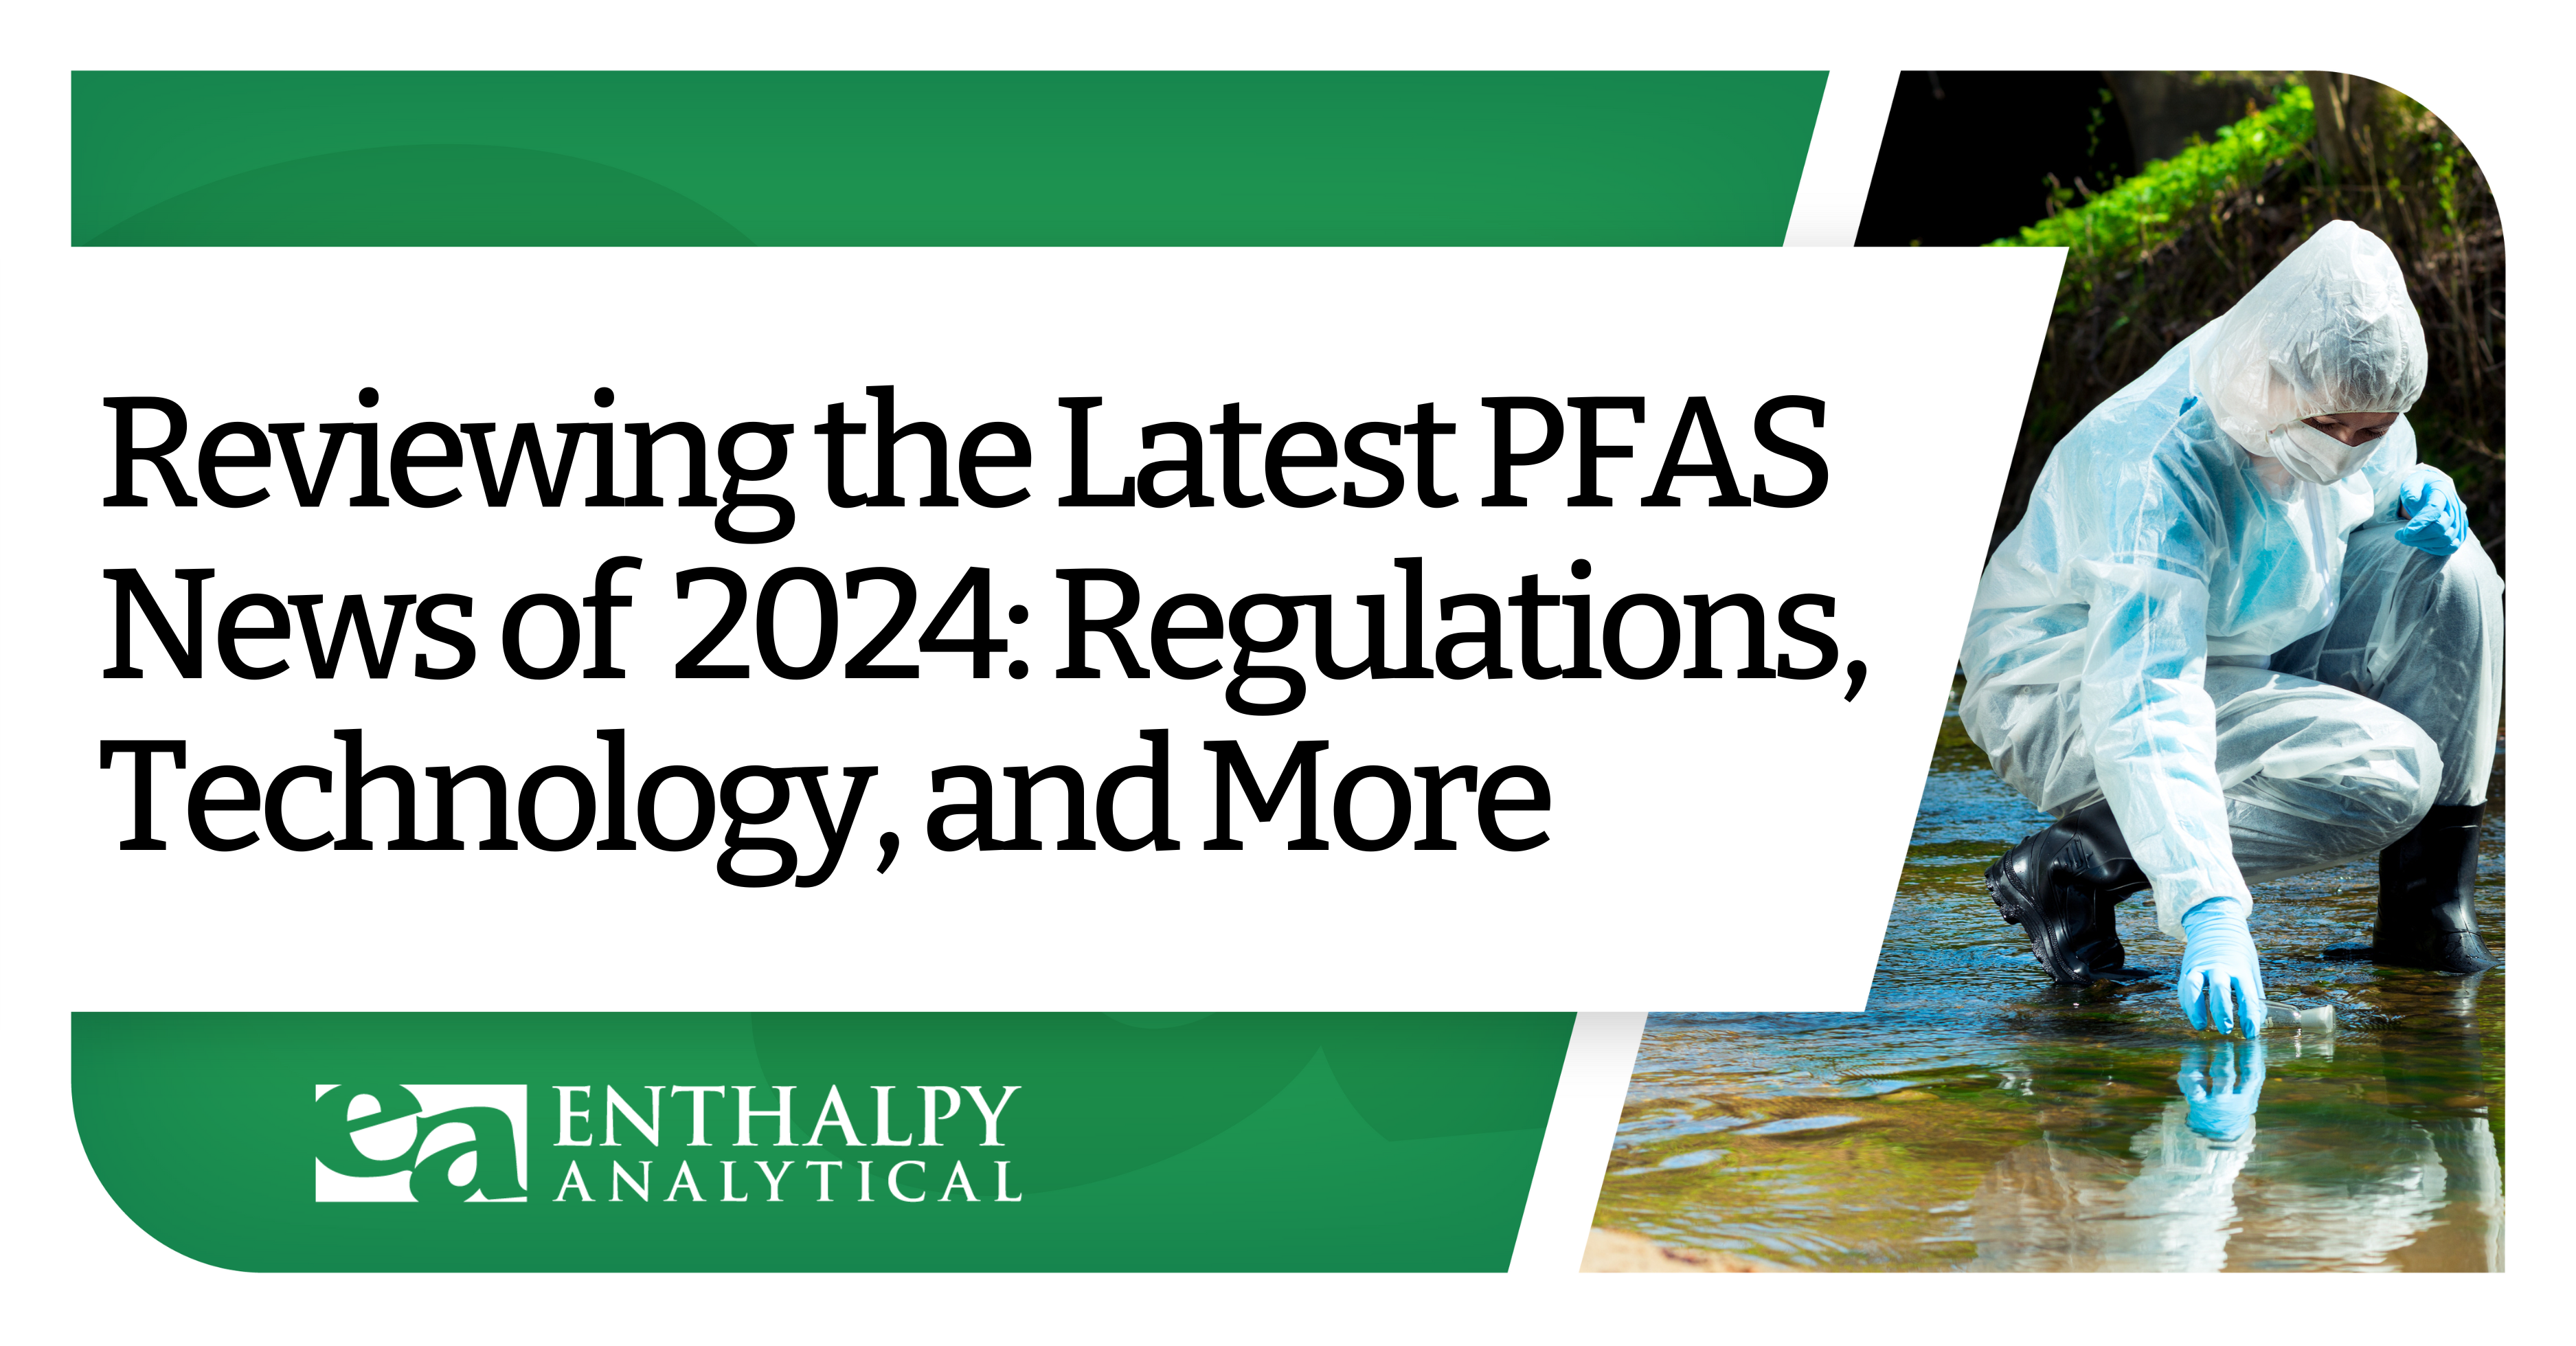 Enthalpy PFAS News of 2024